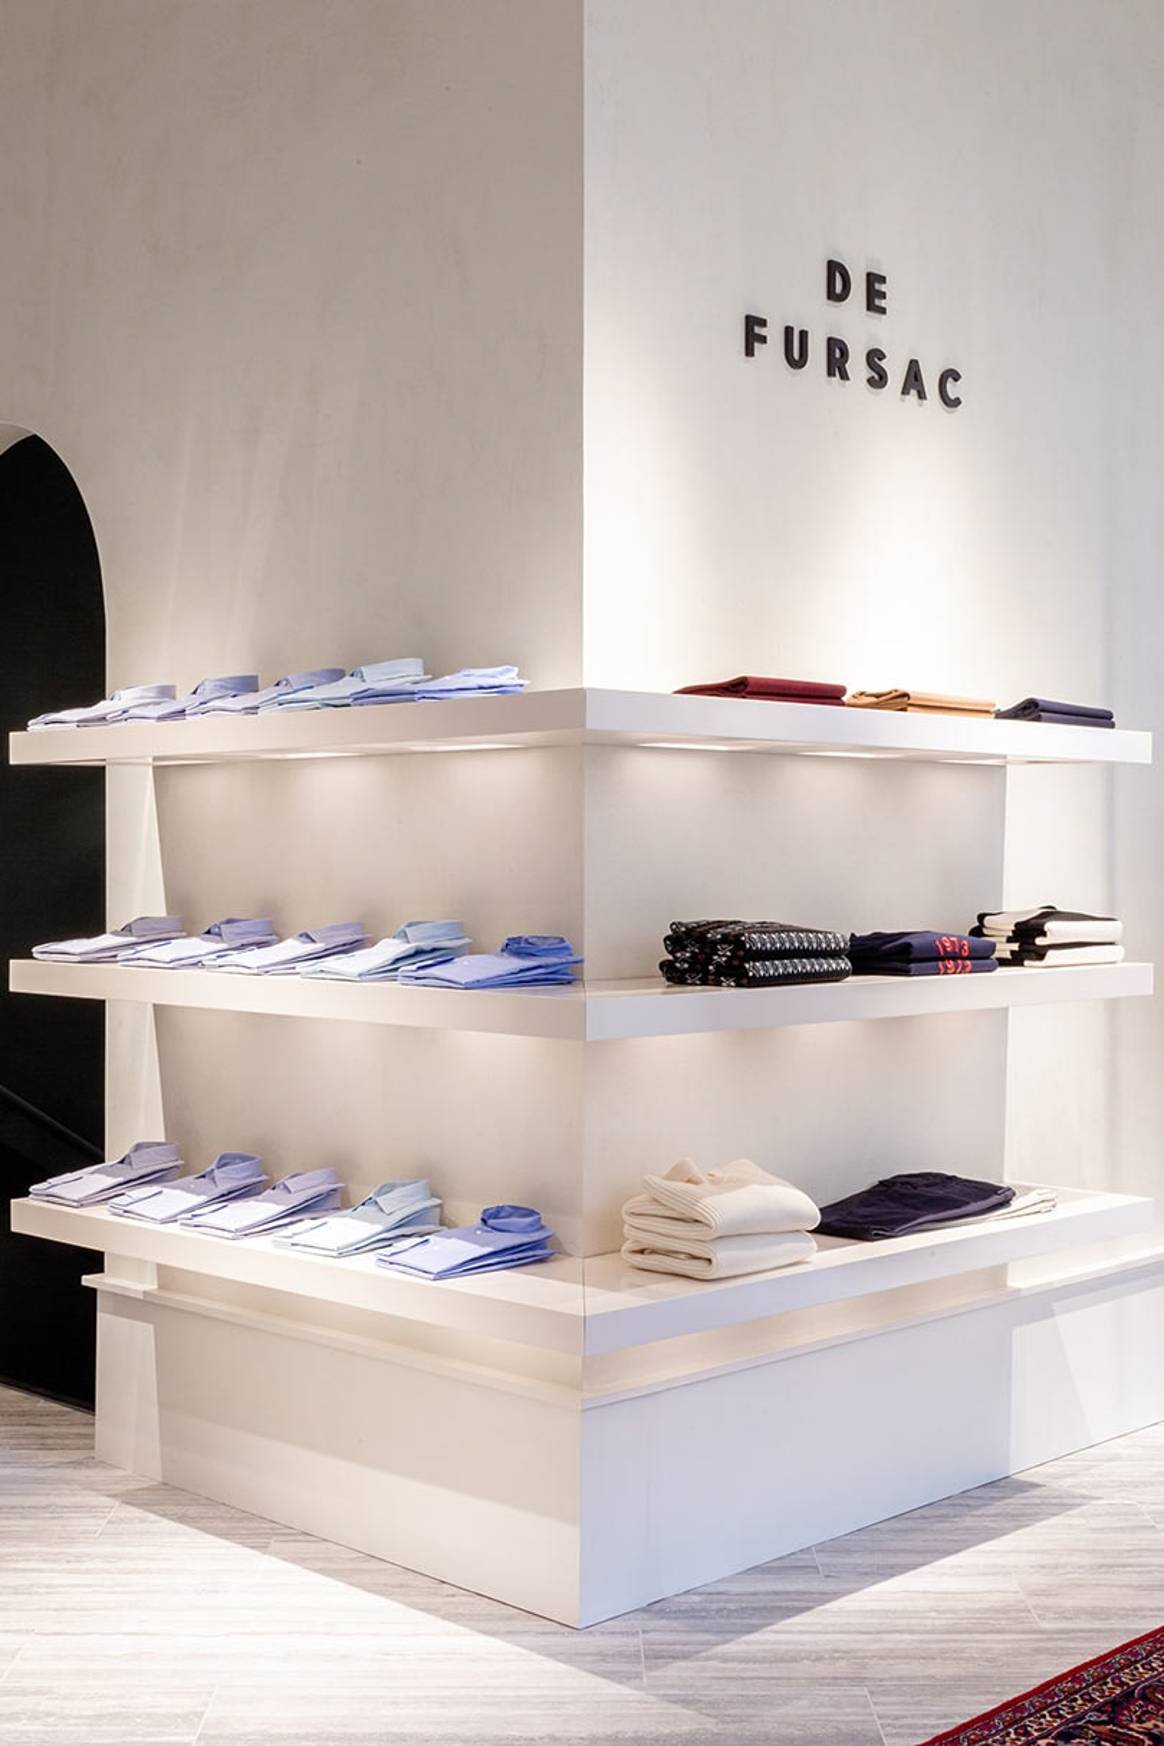 De Fursac opens boutique in London